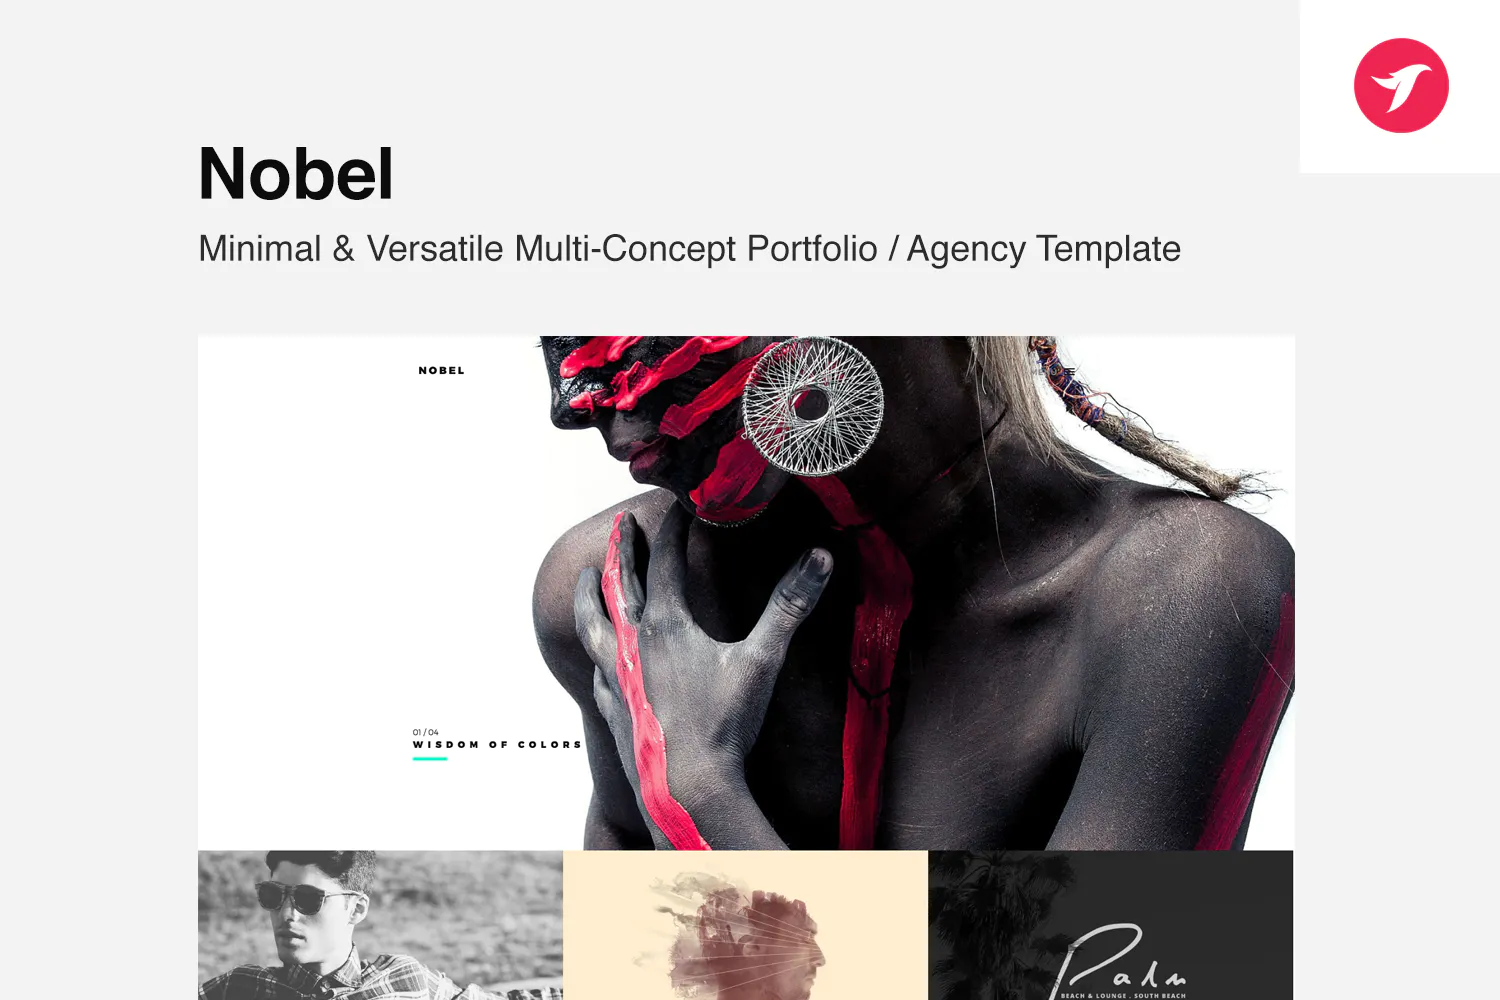 Nobel – Minimal & Versatile Multi-Concept Template